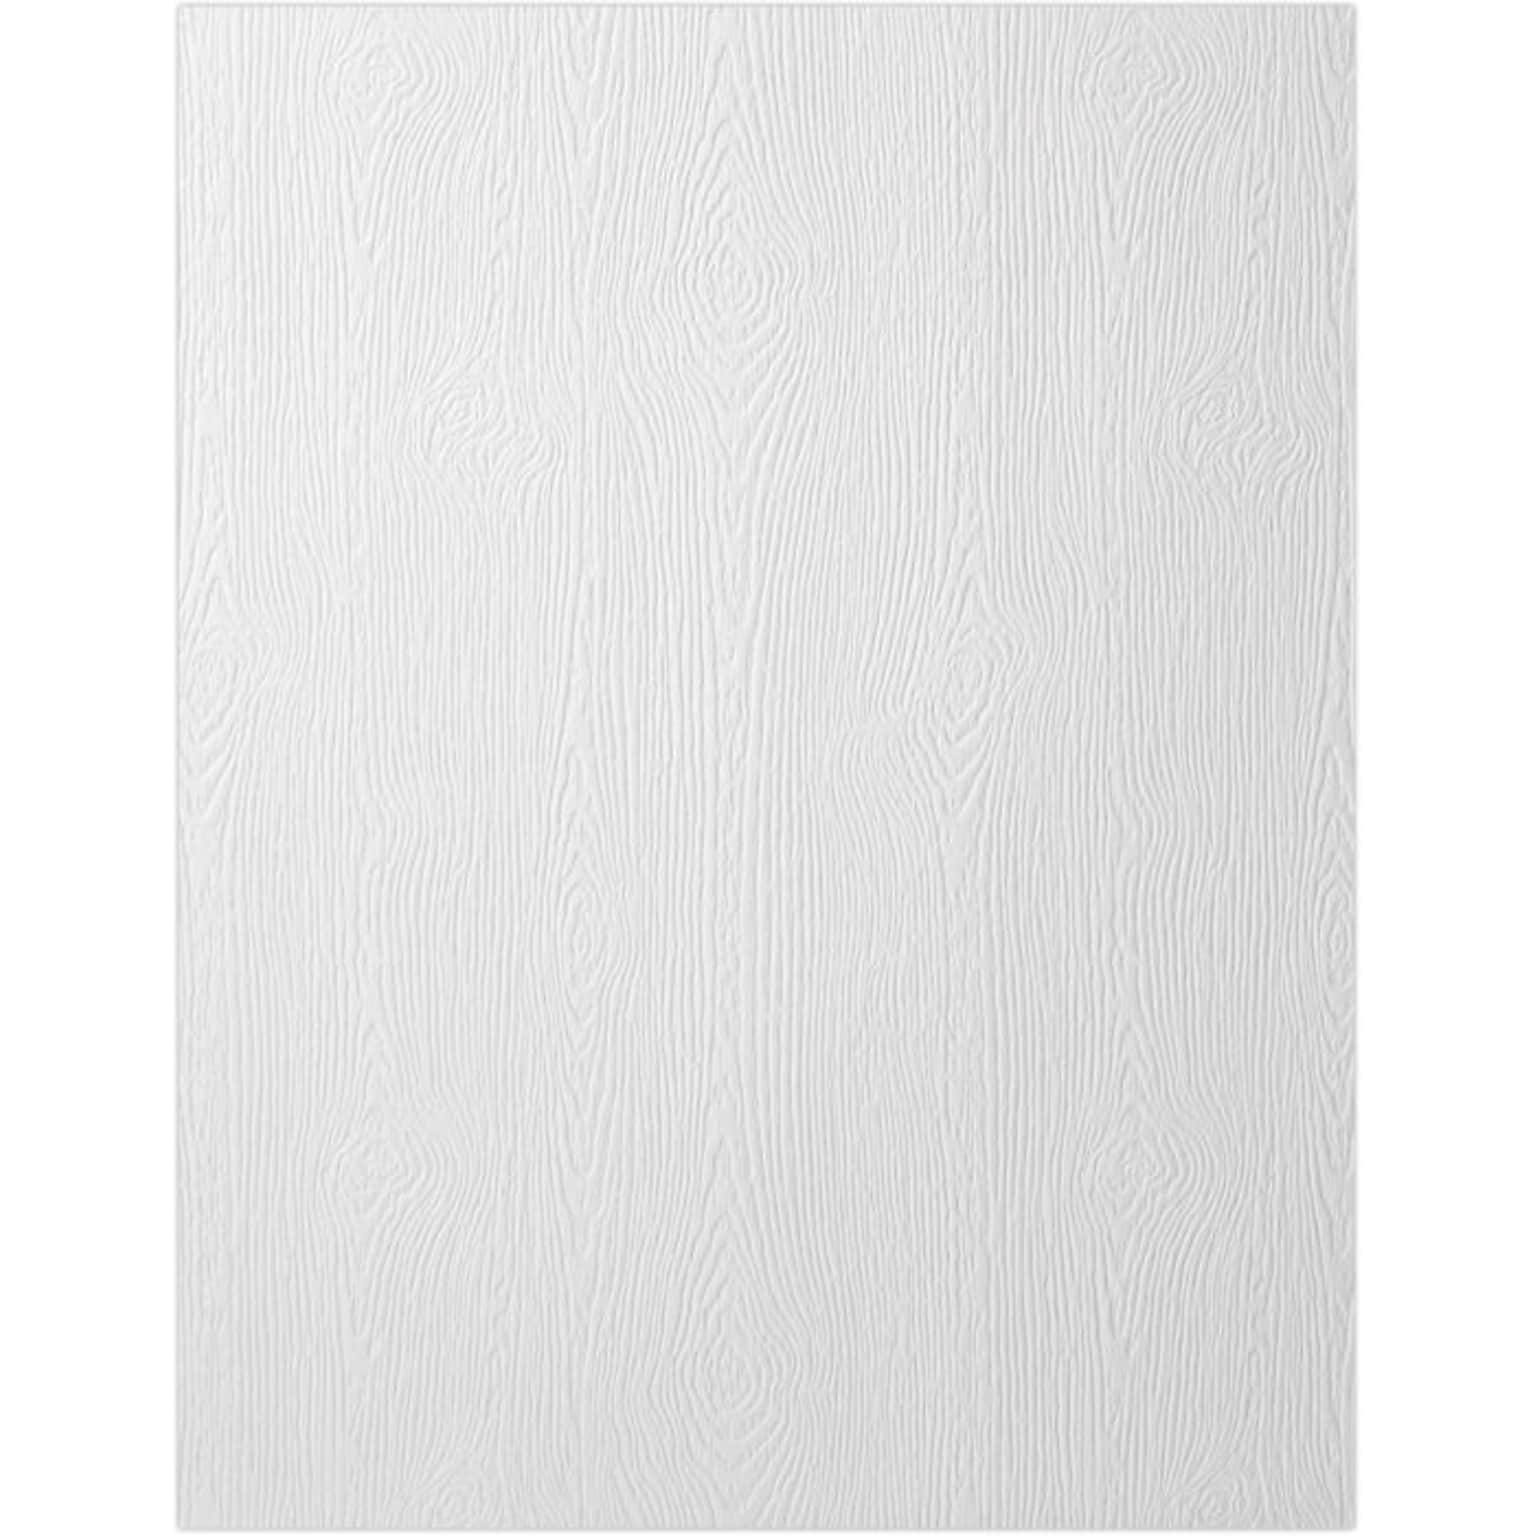 LUX 8 1/2 x 14 Cardstock 50/Pack, White Birch Woodgrain (81214-C-S02-50)